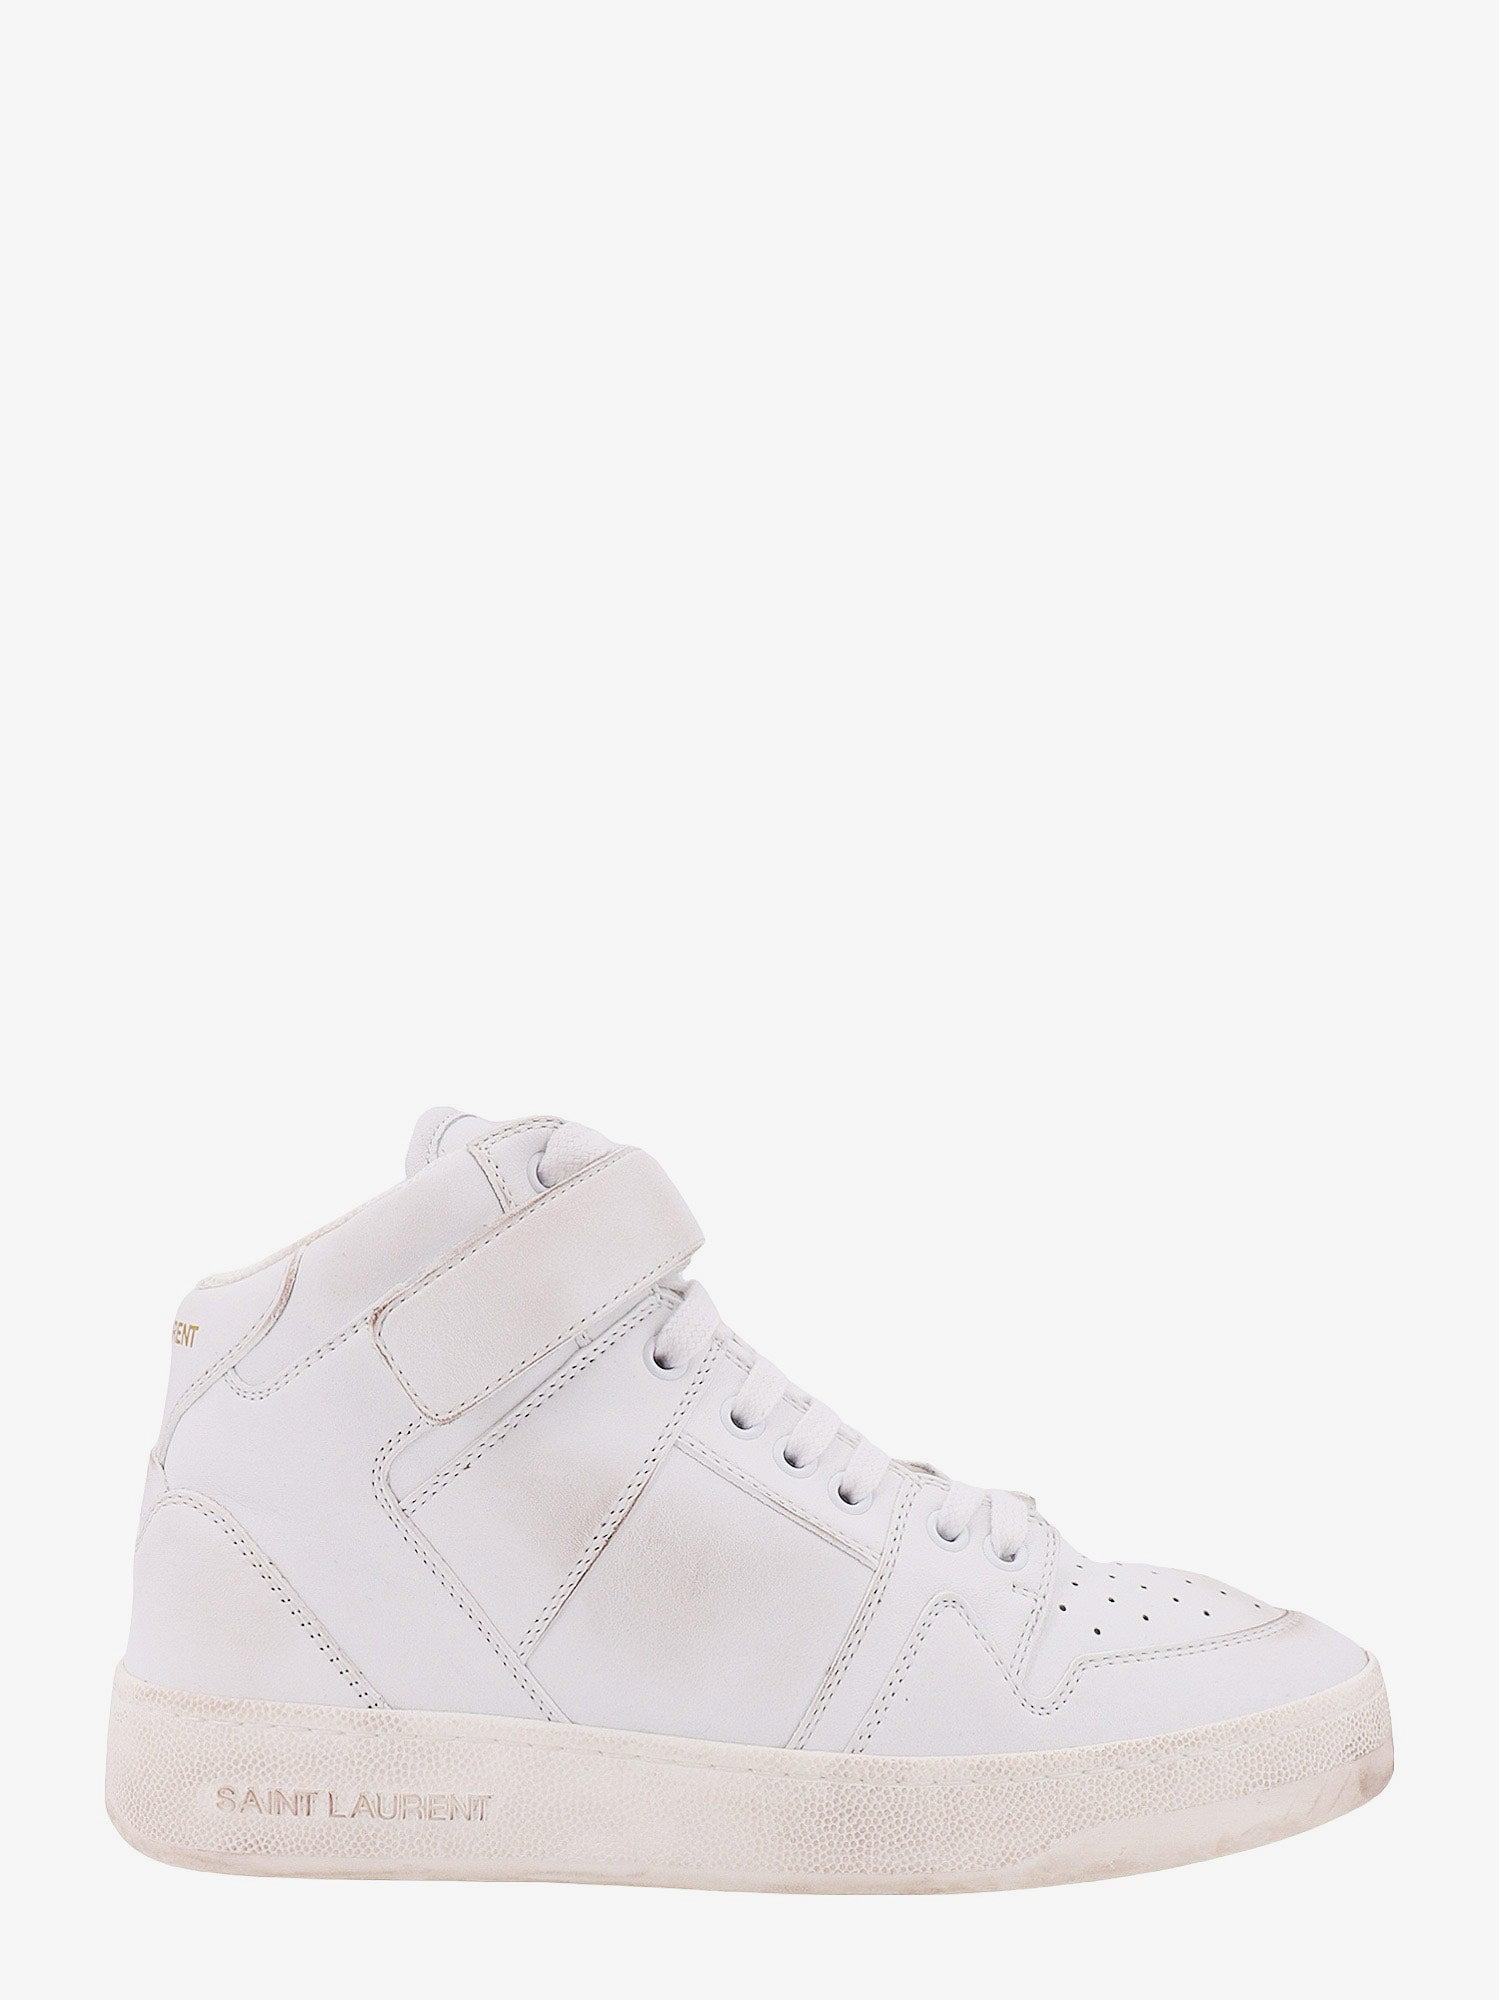 Saint Laurent Man Lax Man White Sneakers - Walmart.com